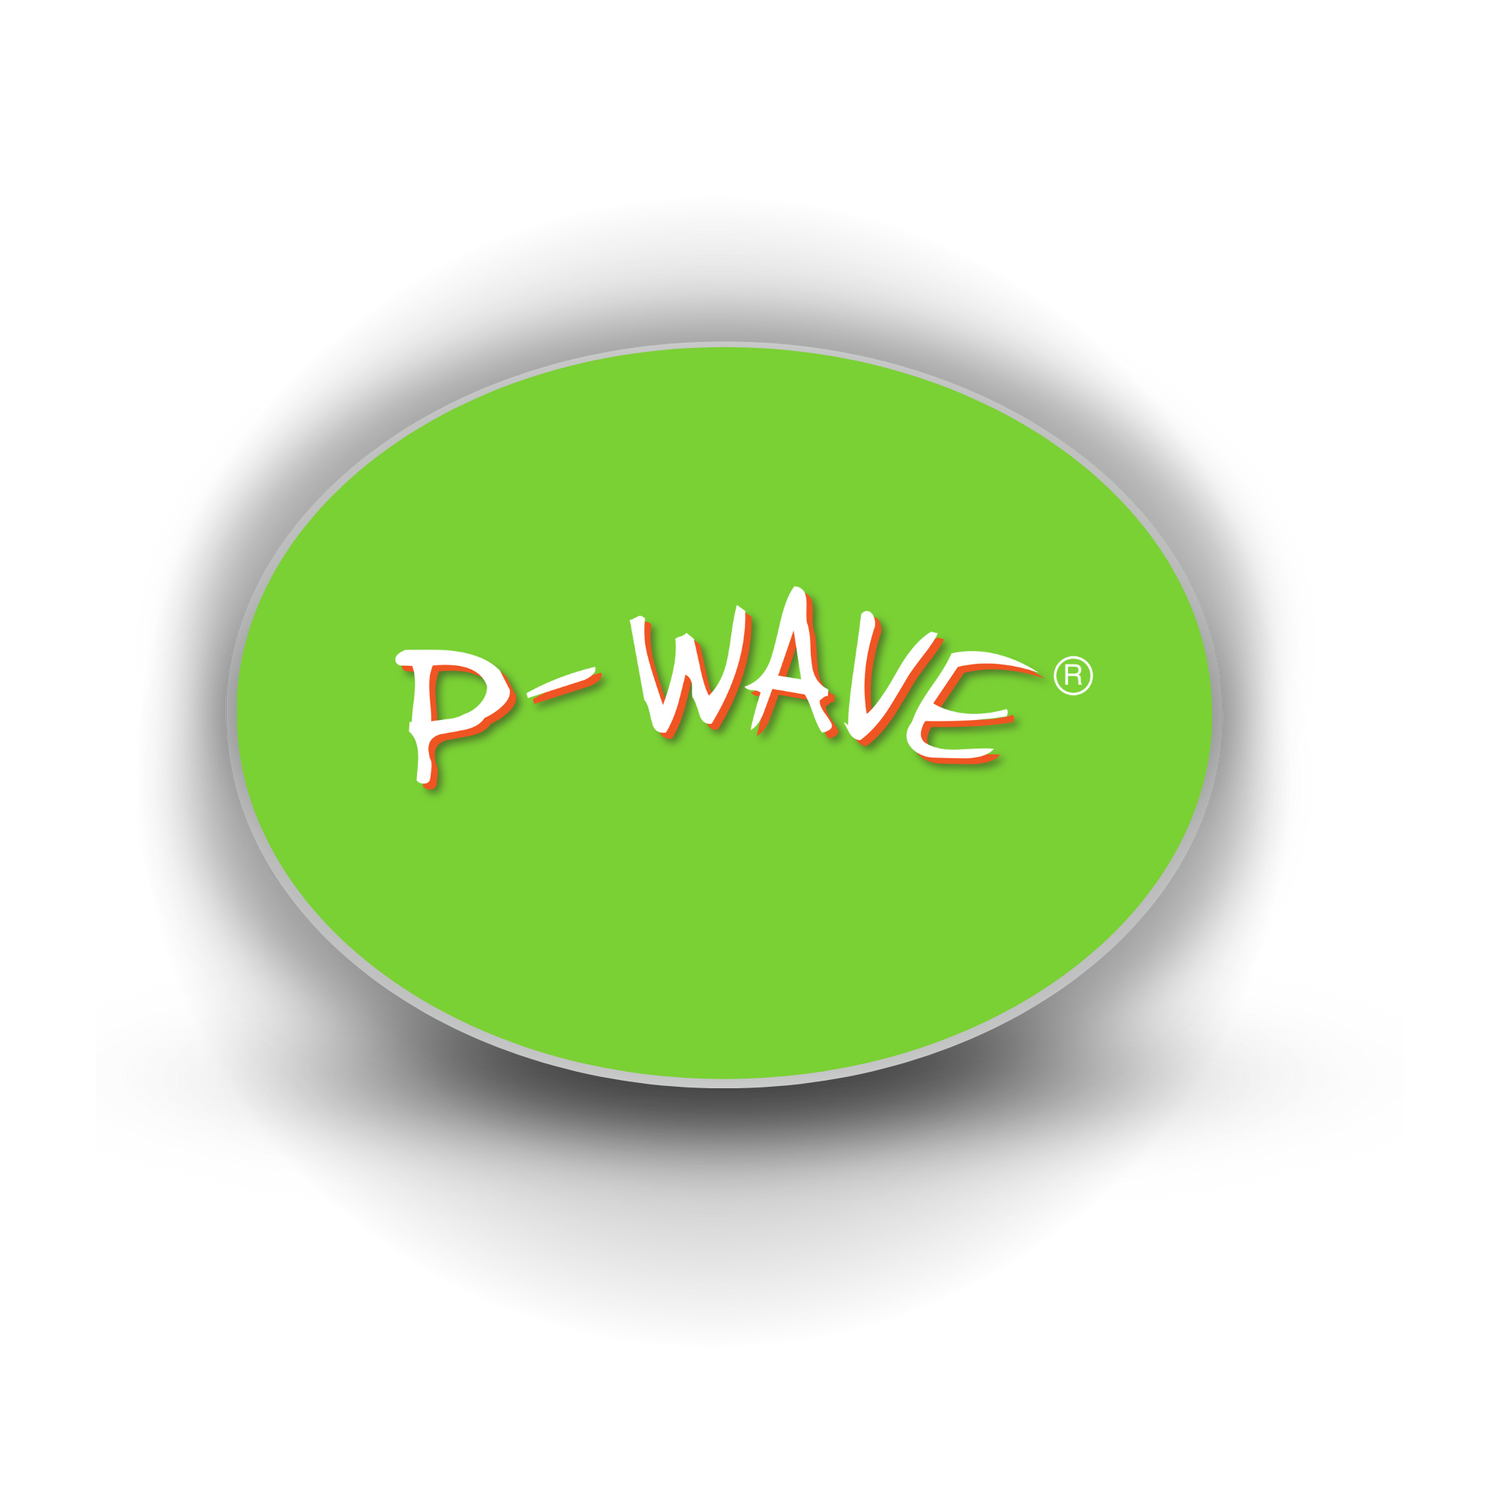 P-Wave Elliptical logo